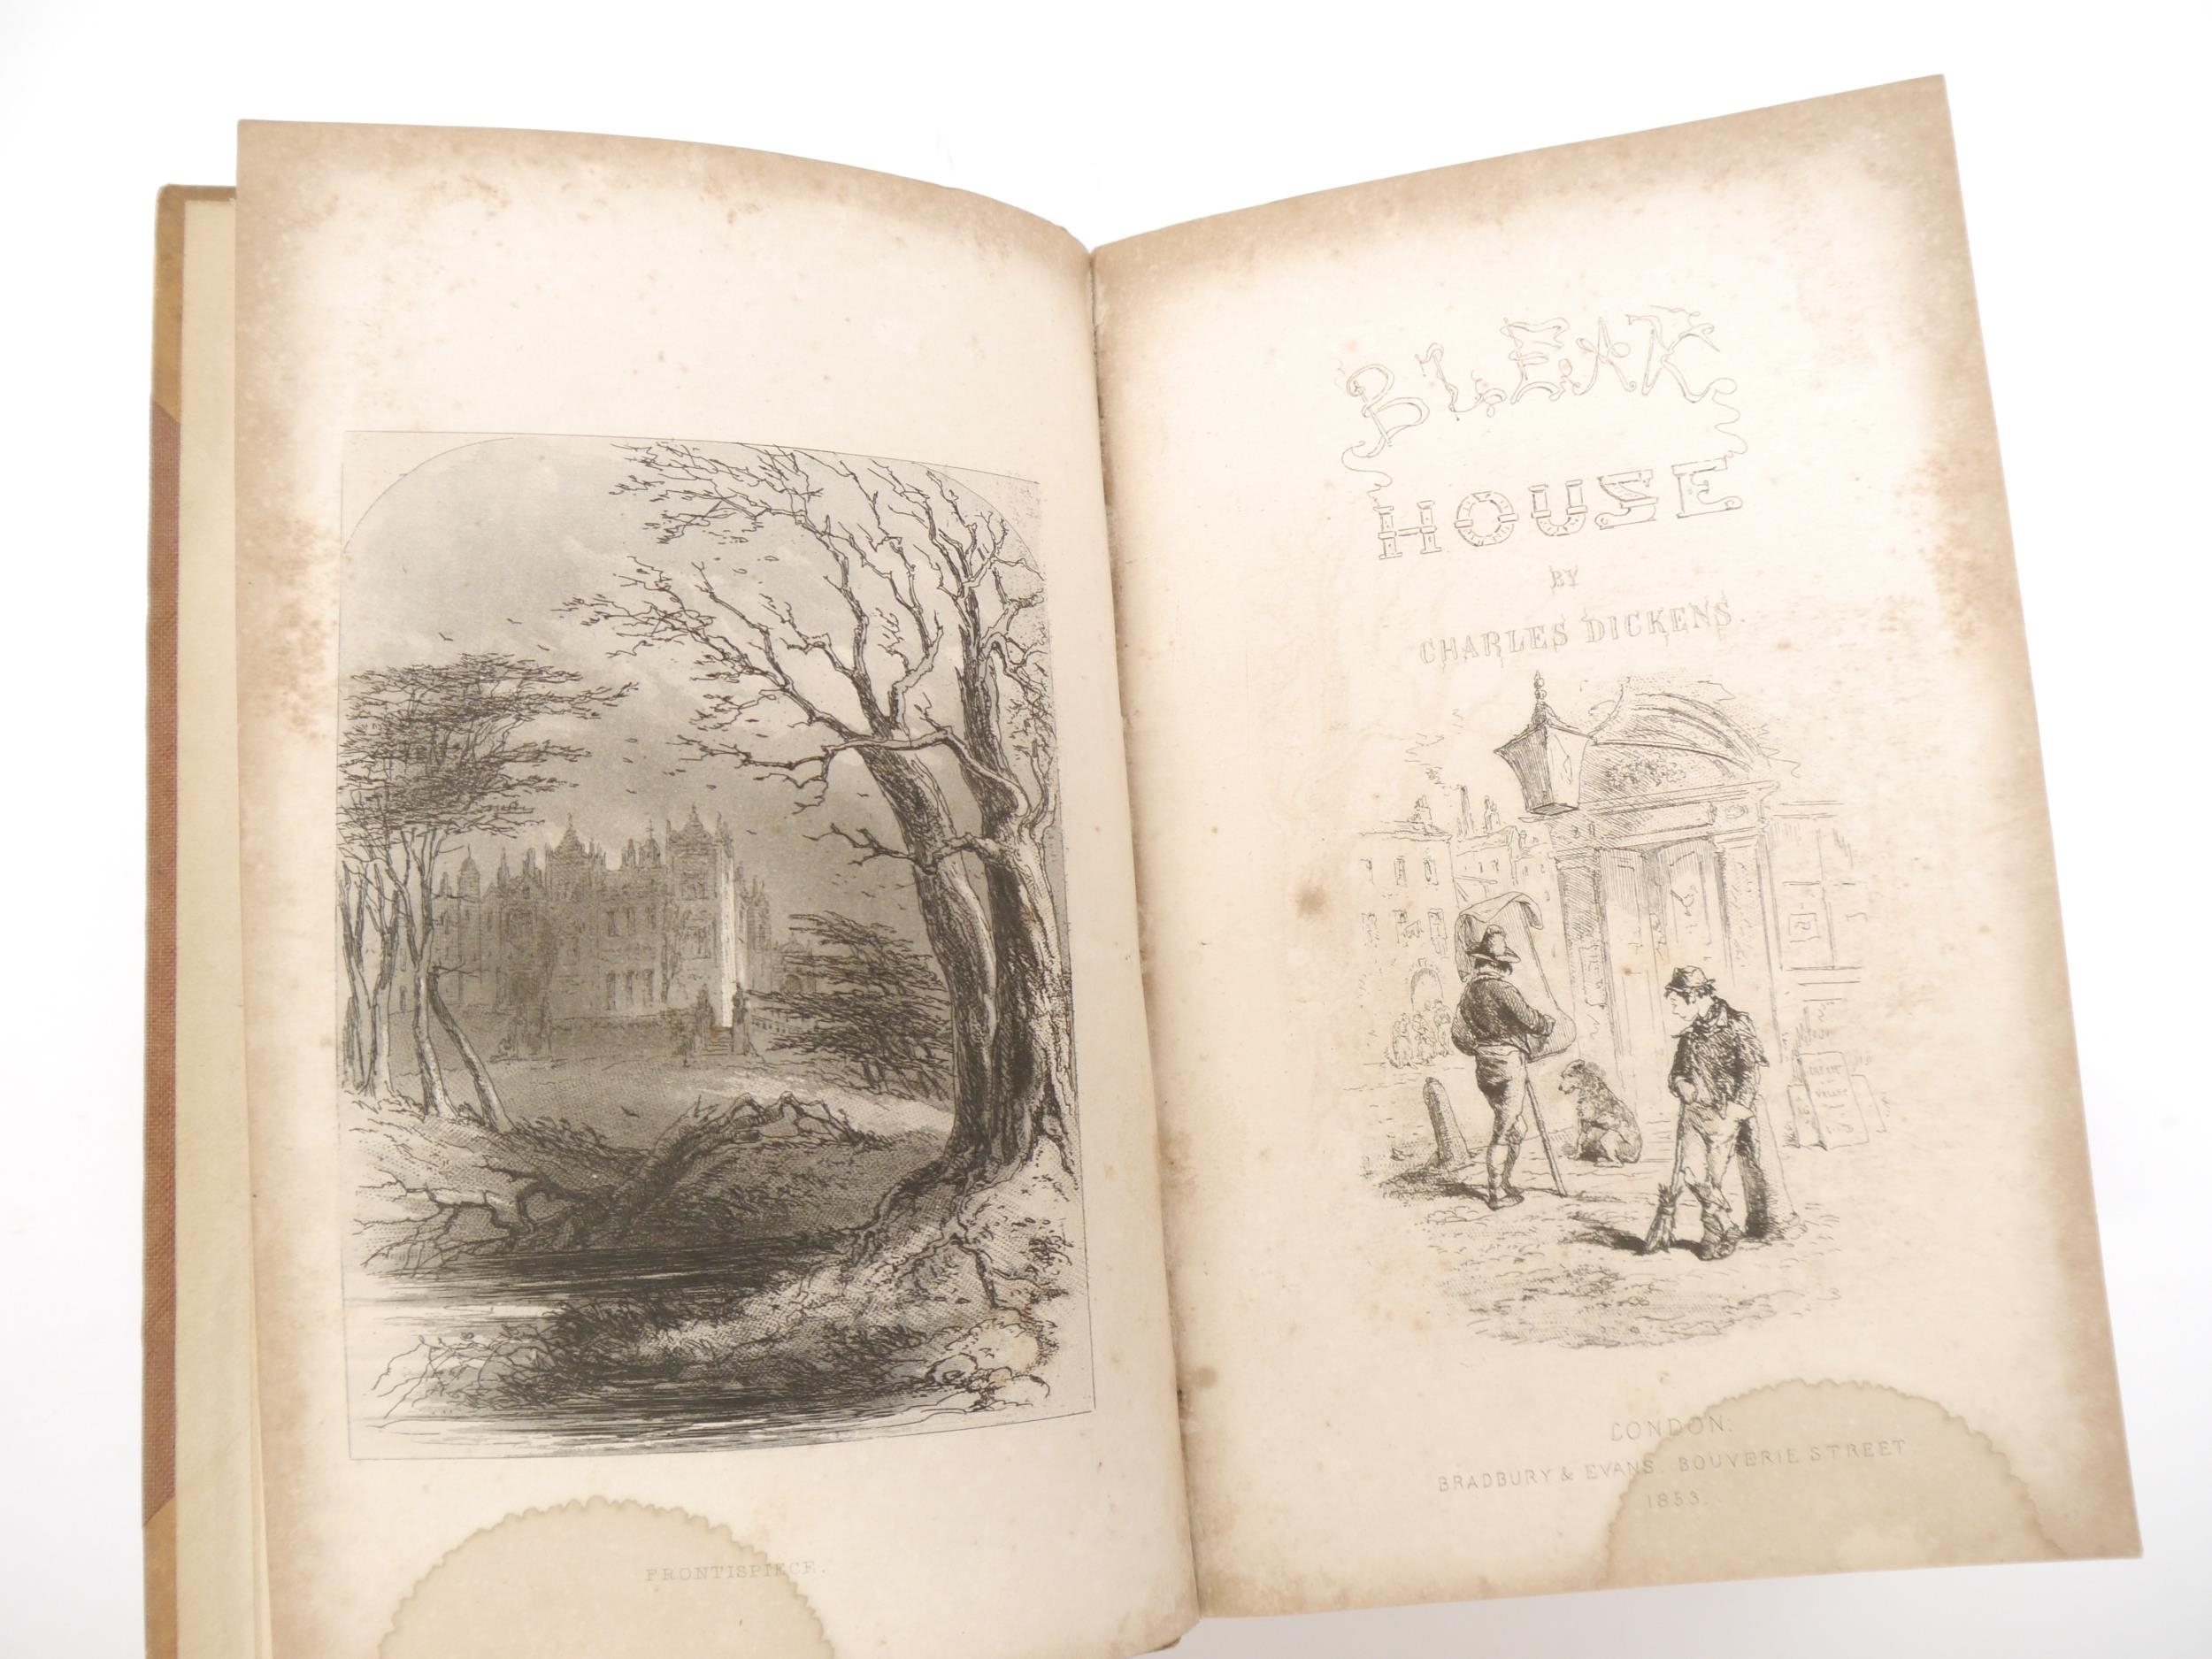 Charles Dickens: 'Bleak House', London, Bradbury & Evans, 1853, 1st edition in book form, conforms